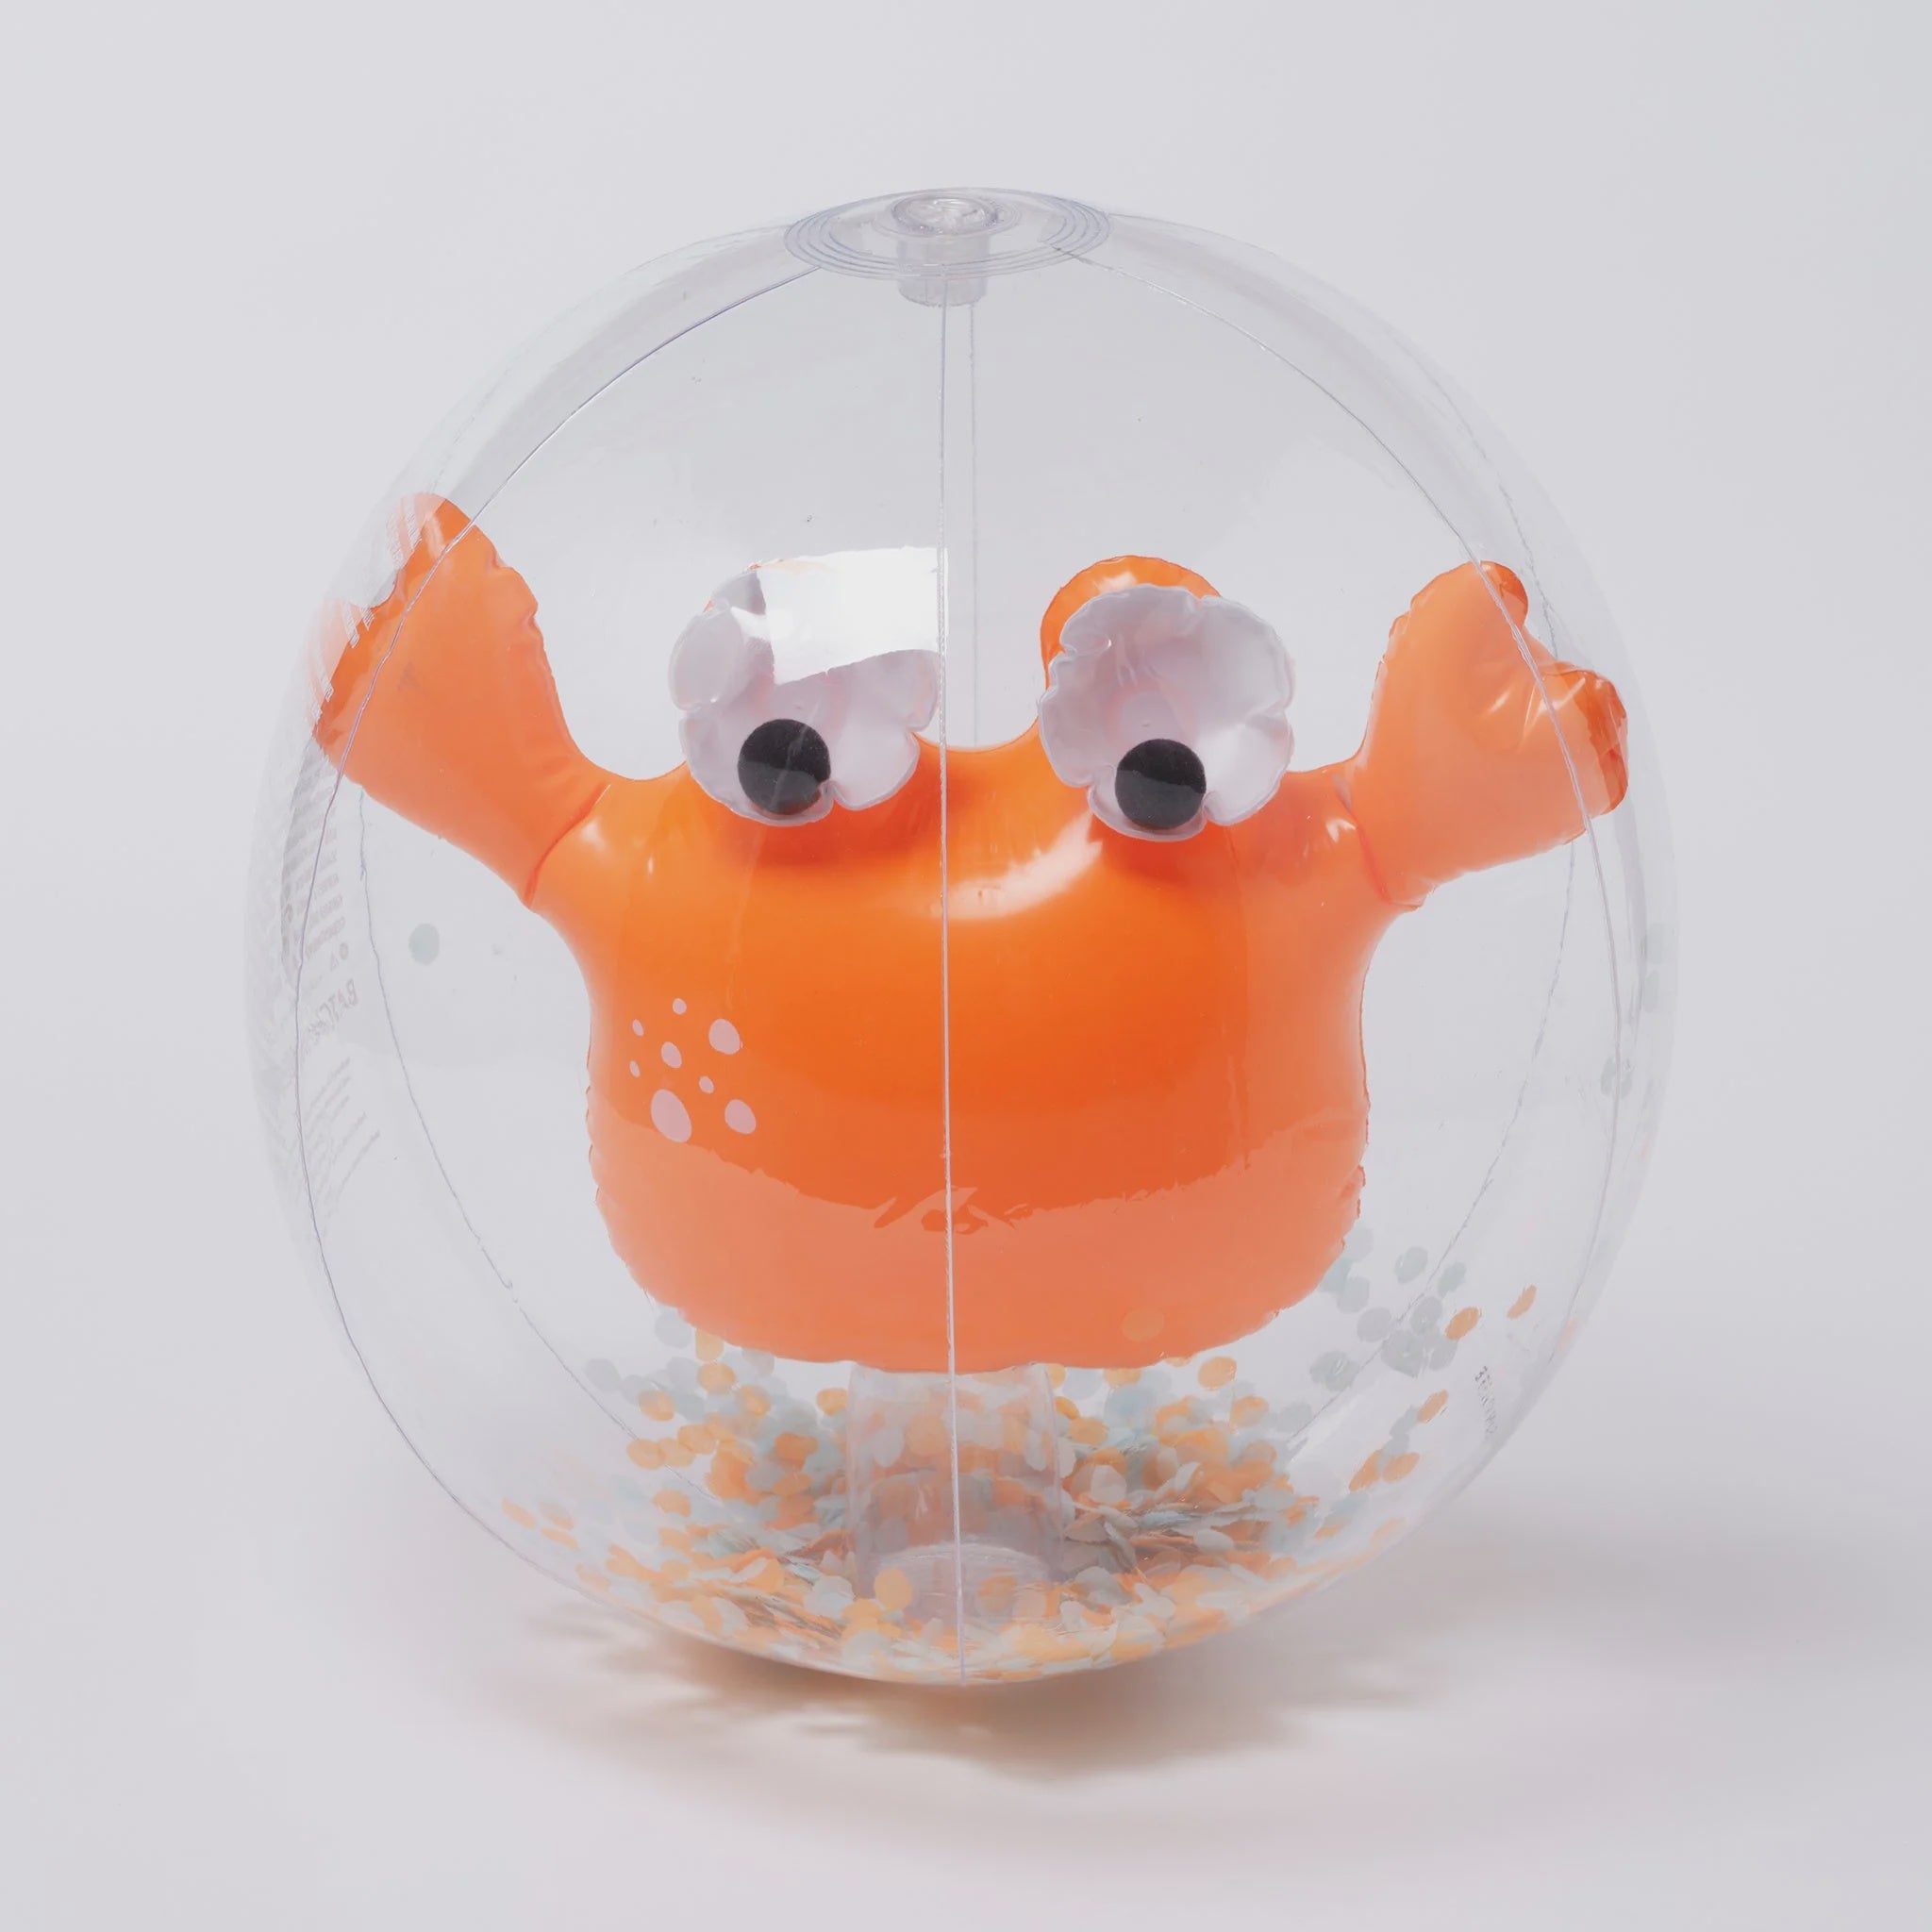 Sunnylife - Inflatable Beach Ball - Sonny the Sea Creature Neon Orange